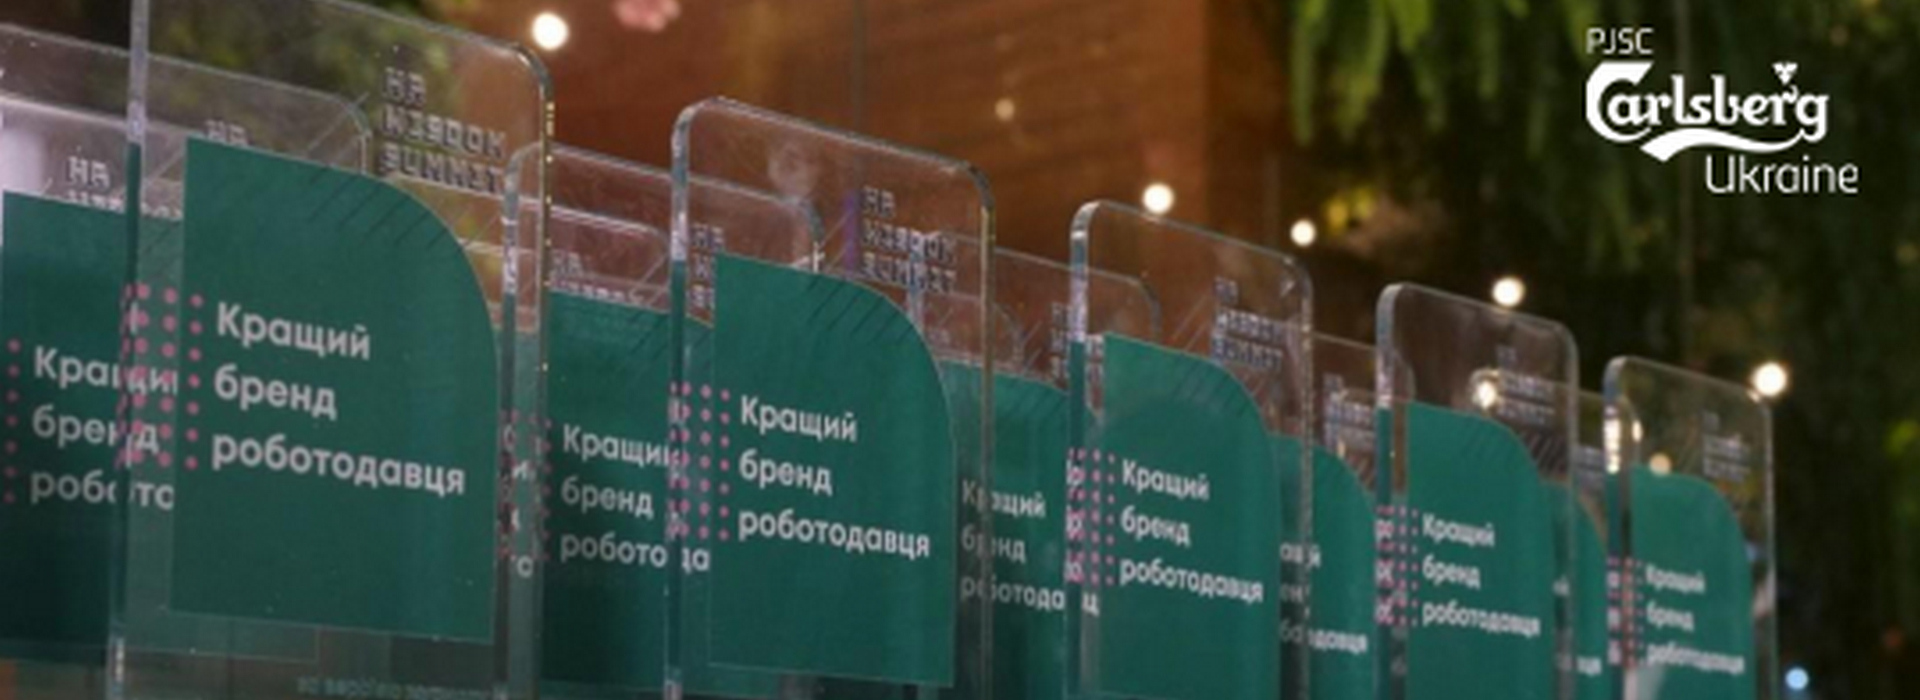 Carlsberg Ukraine in the Ranking of the Best Employers